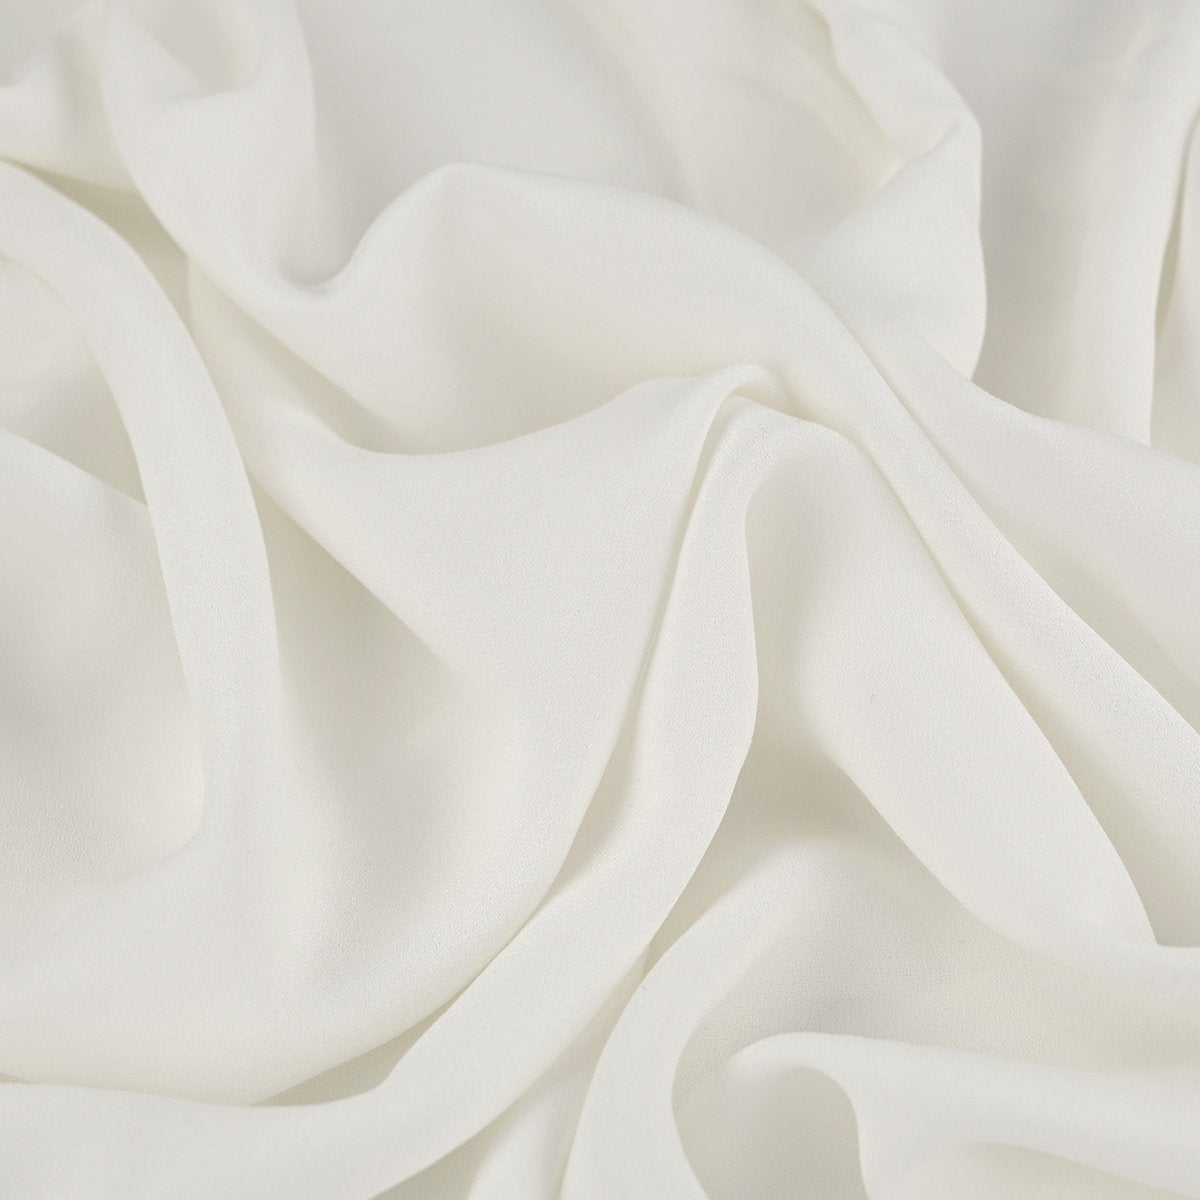 White Crepe Fabric 570